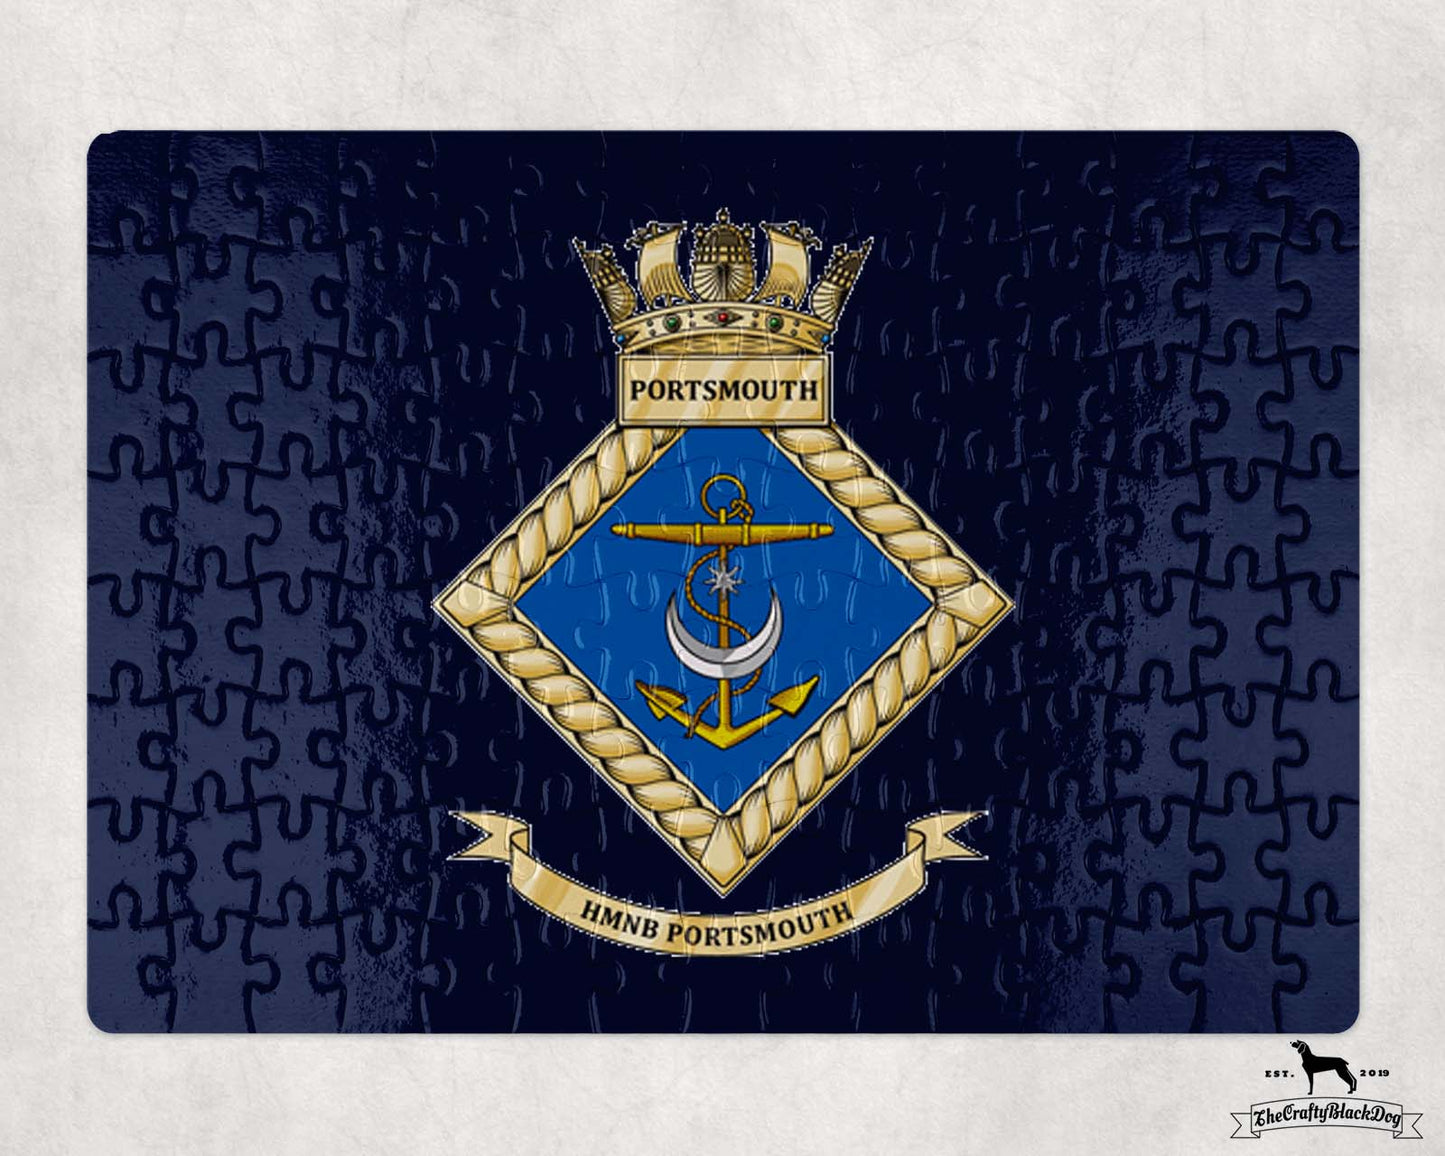 HMNB Portsmouth - Jigsaw Puzzle